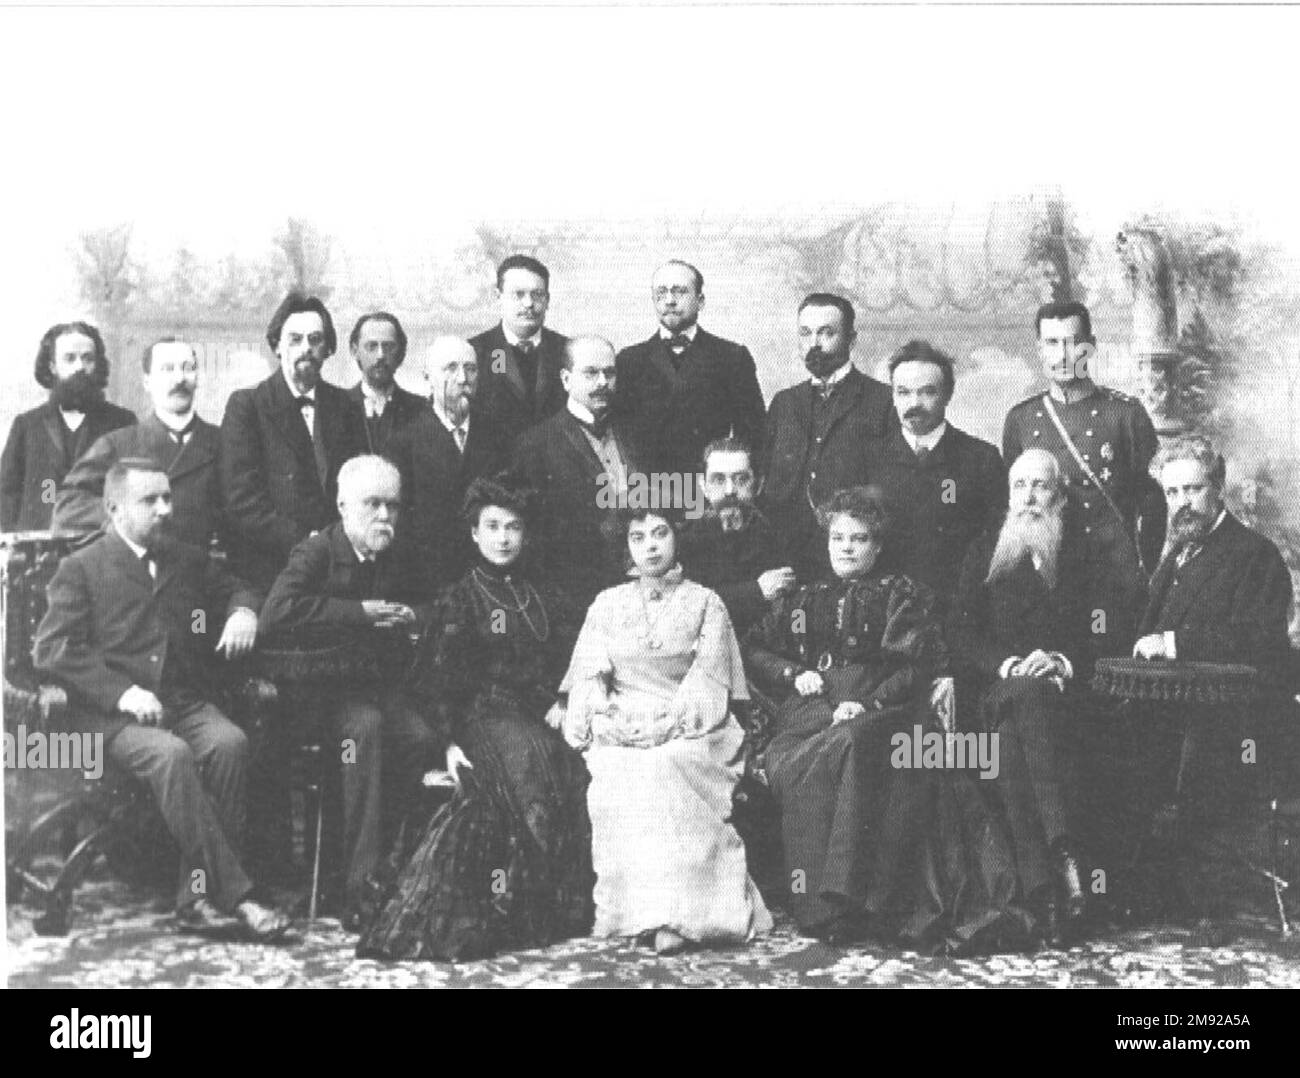 Circolo letterario Venerdì. Seduta da sinistra a destra: A. A. Golenishchev-Kutuzov, V. S. Likhachev, Mirra Lokhvitskaya, P. S. Solovyova (Allegro), A. E. Zarin, Olga Chyumina (?), V. P. Avenarius, N. N. Yuriin ( ?); in piedi: A. I. Leman, V. L. Velichko (?), A. A. Izmailov, K. N. Ldov (?), Fedor Sologub, V. A. Shuf, N. M. Sokolov (?), V. A. Mazurkevich, P. F. Porfirov, N. M. Minsky, Prince. V. V. Baryatinsky (?). ca. 1900 Foto Stock